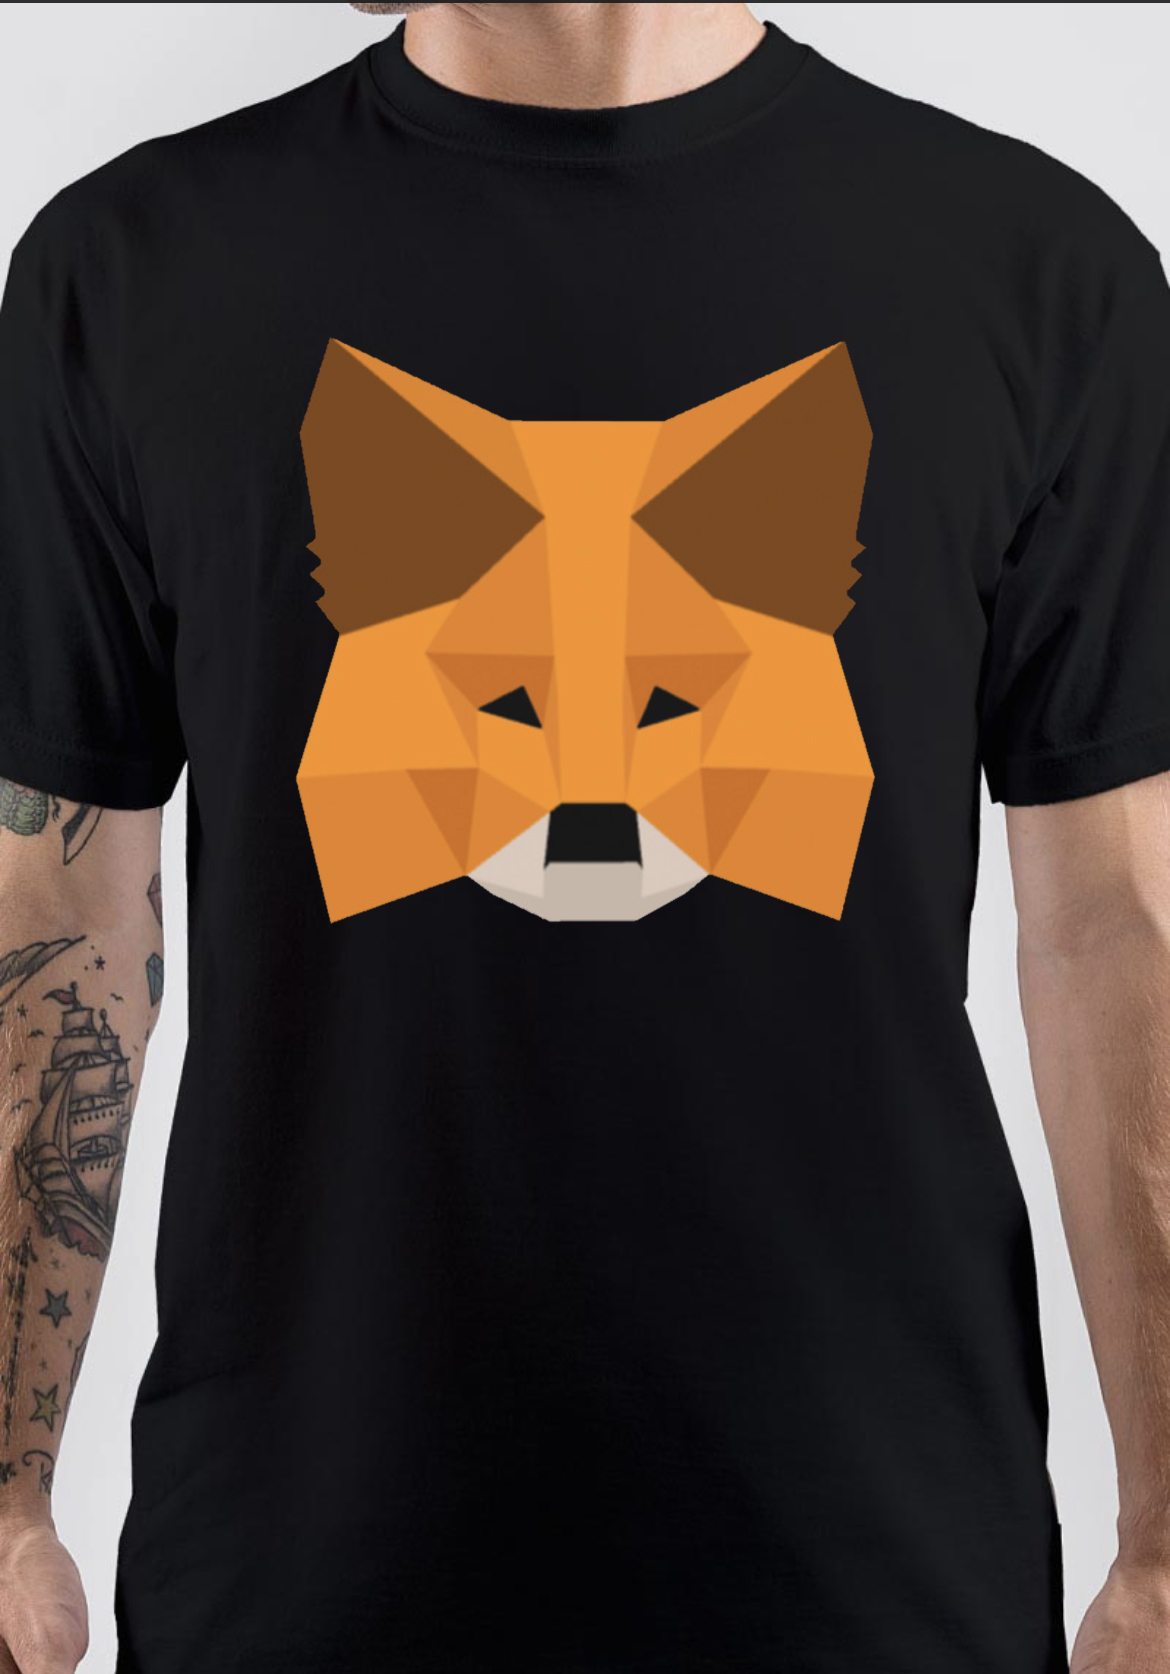 MetaMask T-Shirt And Merchandise